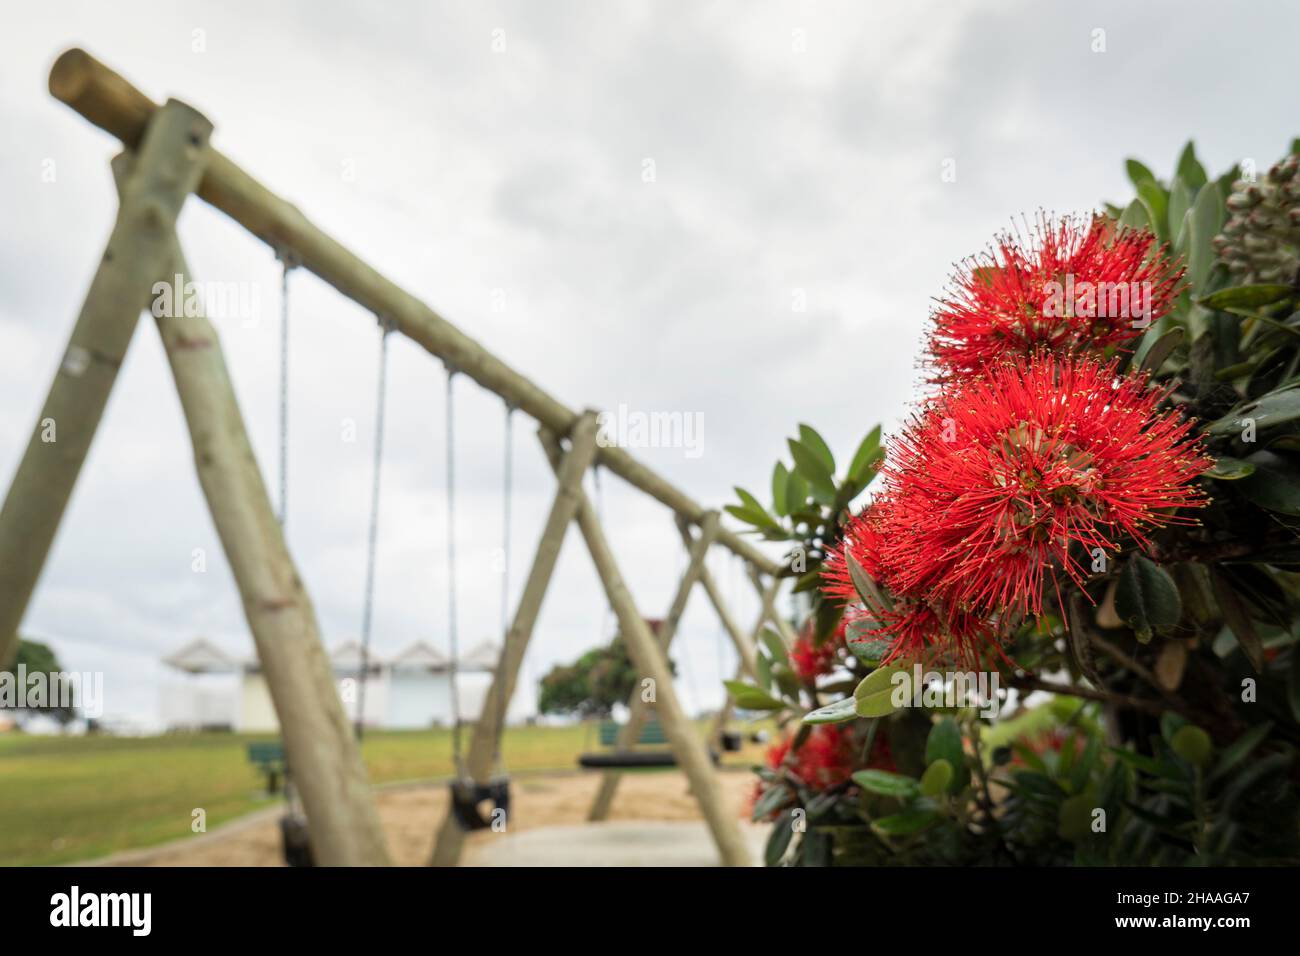 Pohutukawa tree in full bloom in summer at Milford beach playground. New Zealand Christmas Tree. Stock Photo